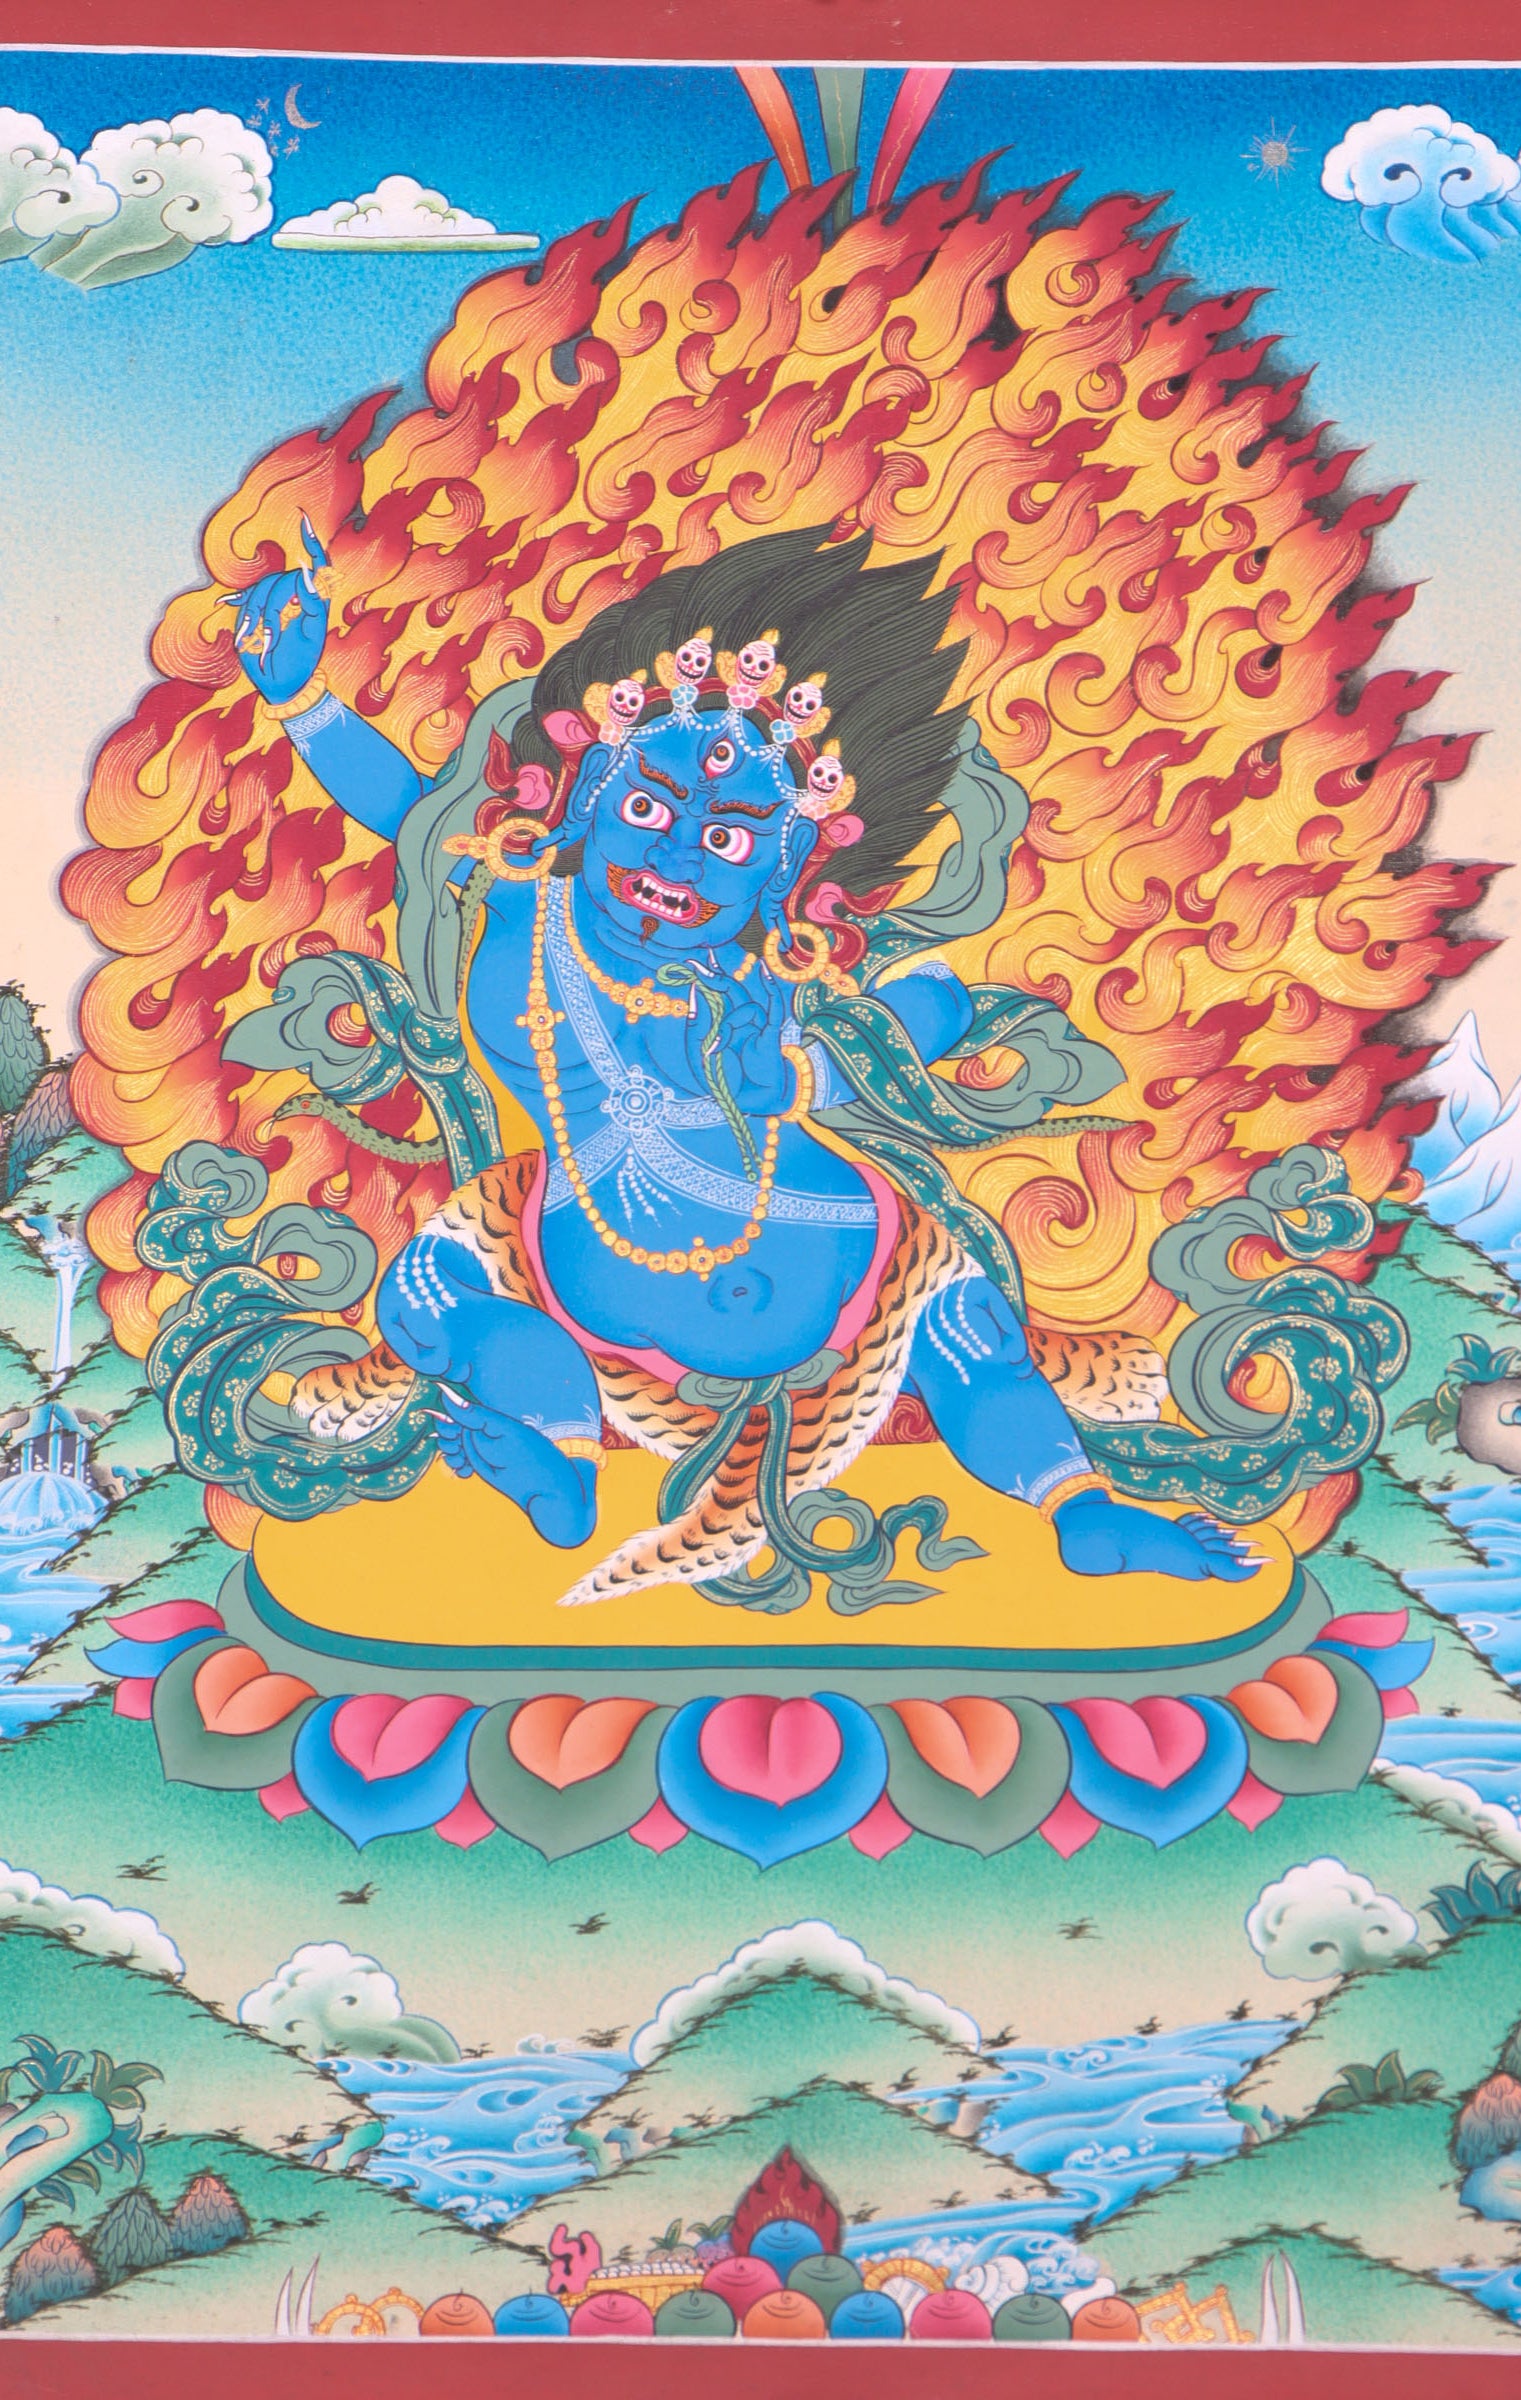 Vajrapani Thangka Painting for protection.